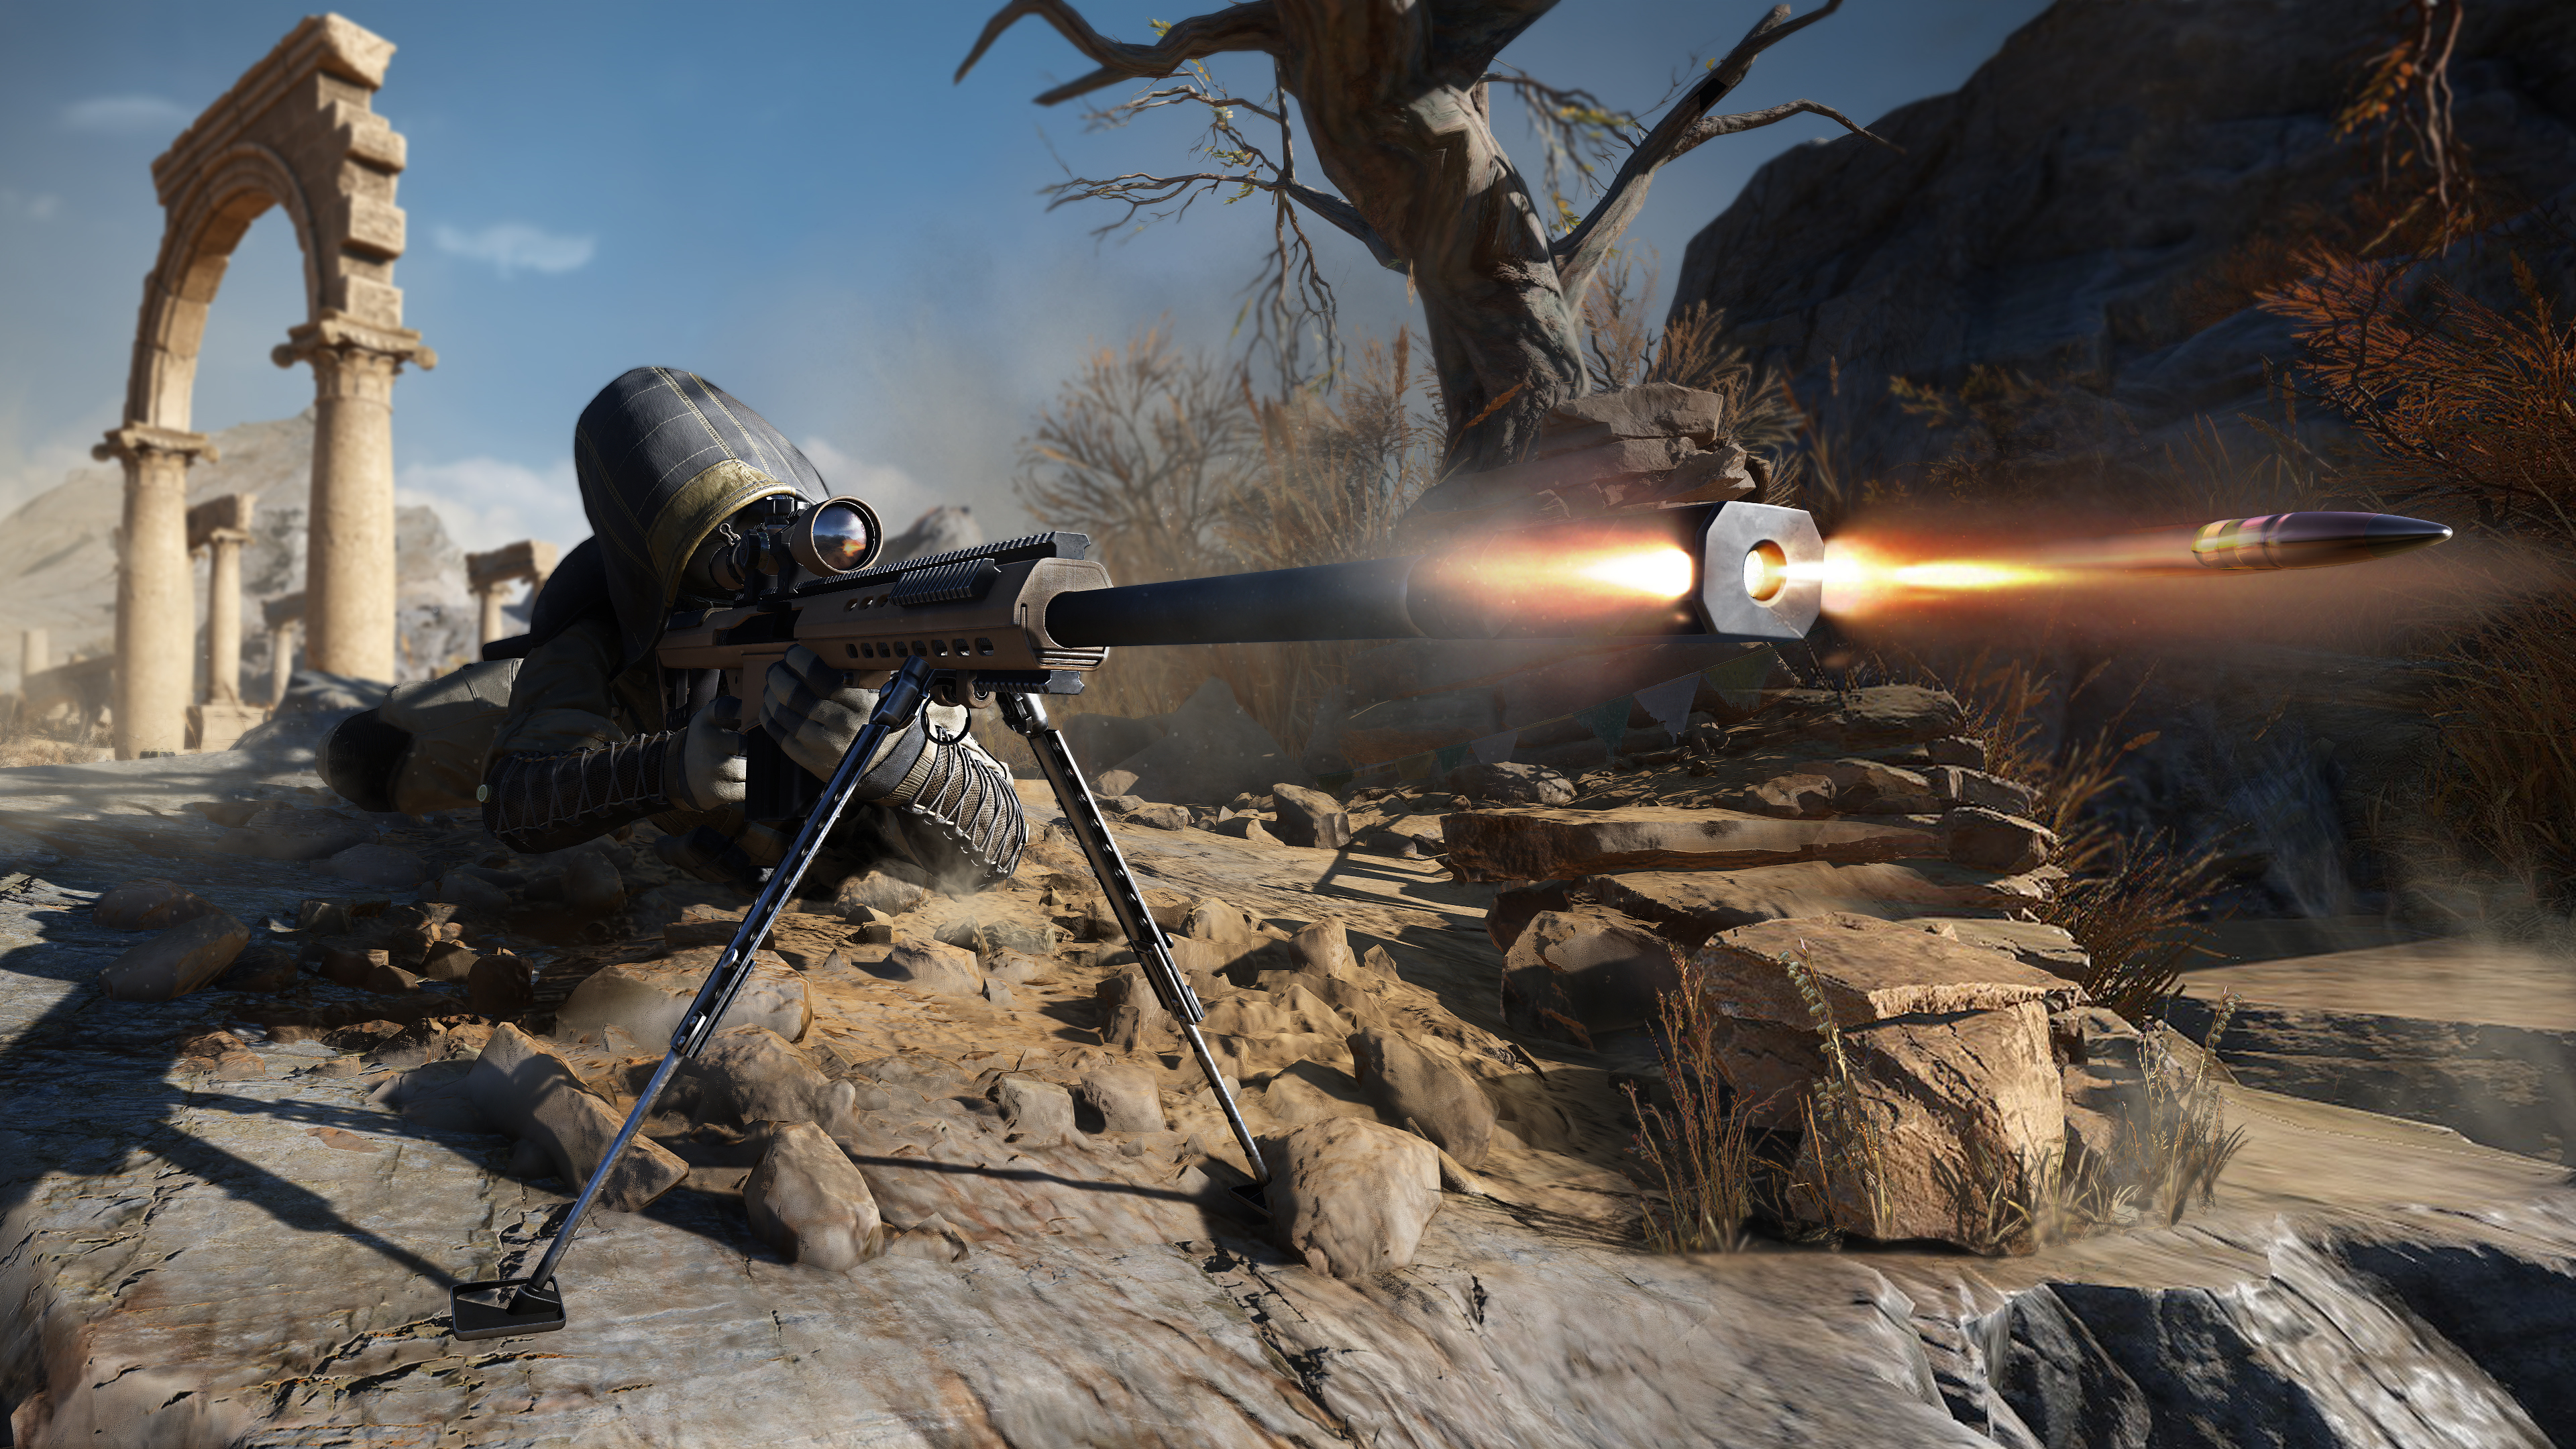 Télécharger des fonds d'écran Sniper Ghost Warrior Contracts 2 HD